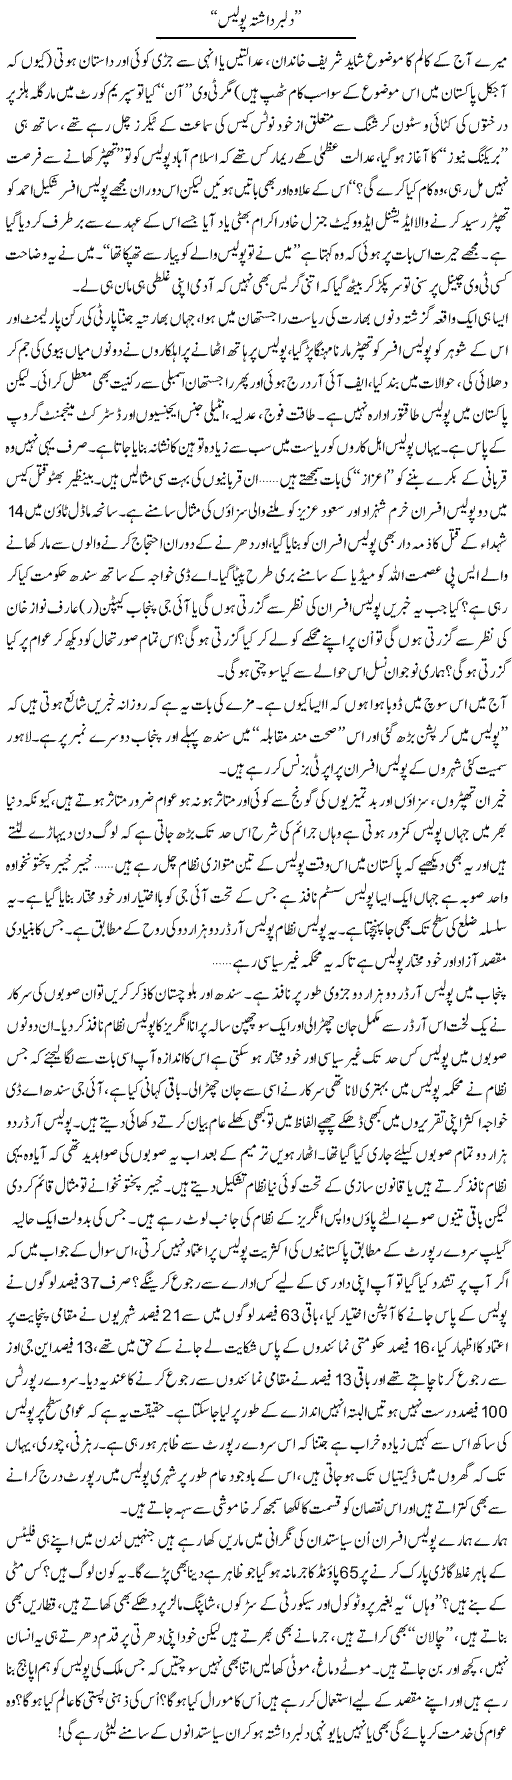 Dilbardashta Police | Ali Ahmad Dhillon | Daily Urdu Columns